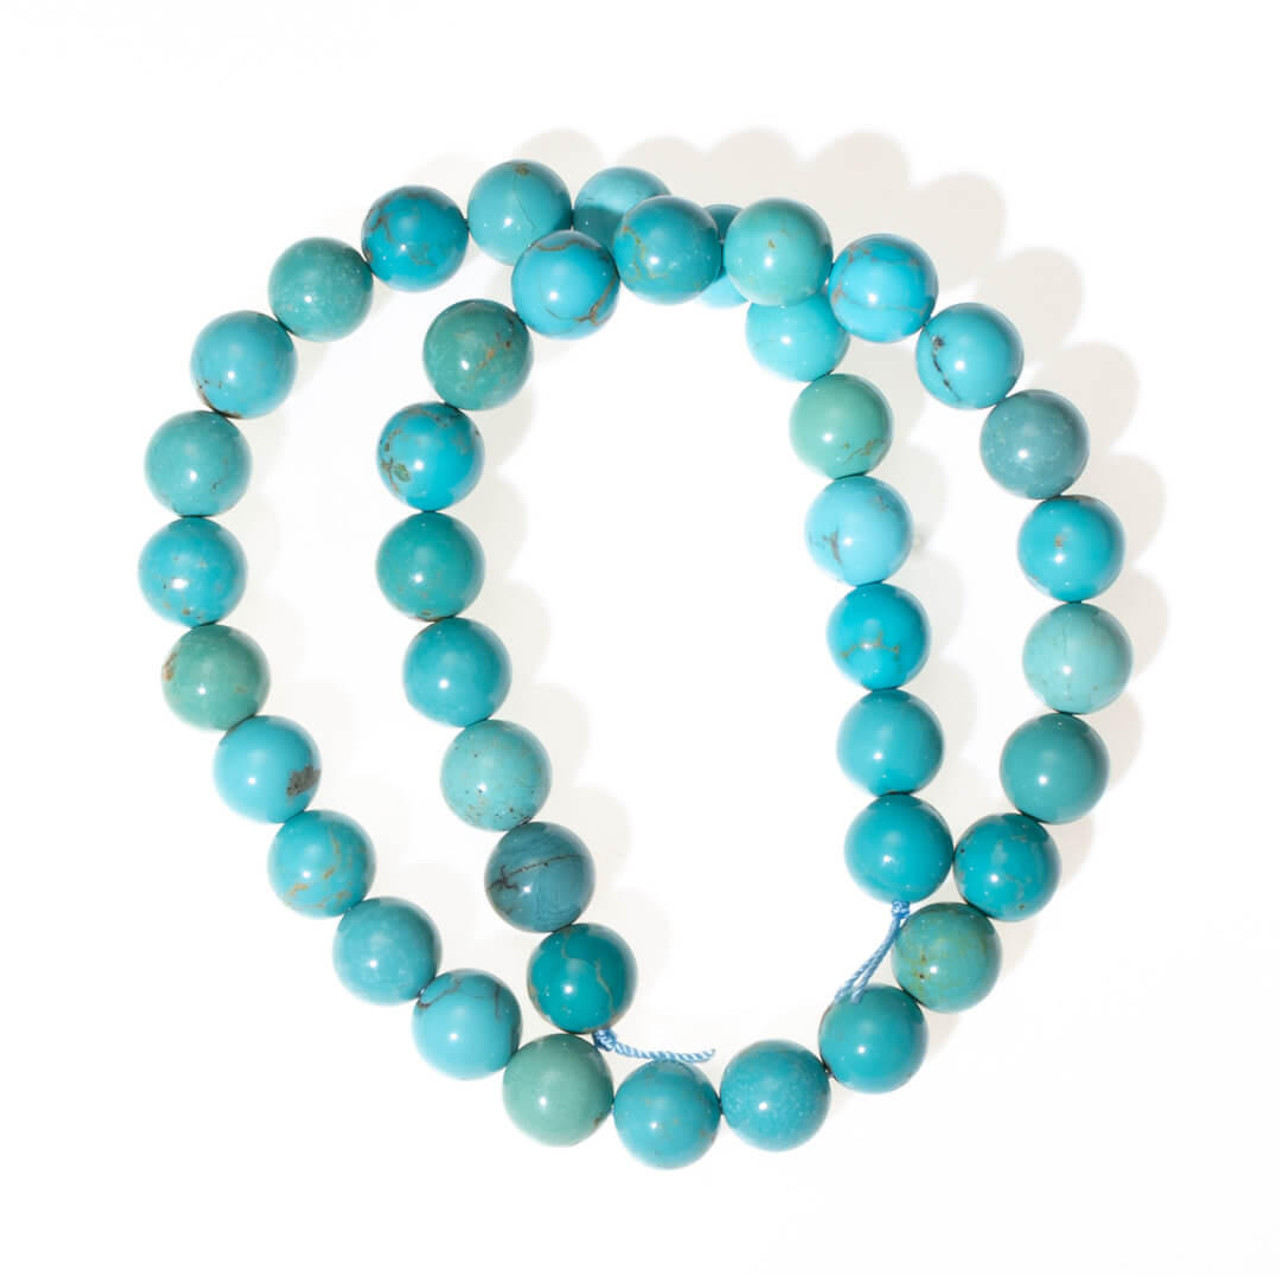 Turquoise Beads Mina Maria  10mm Rounds MMR10c 